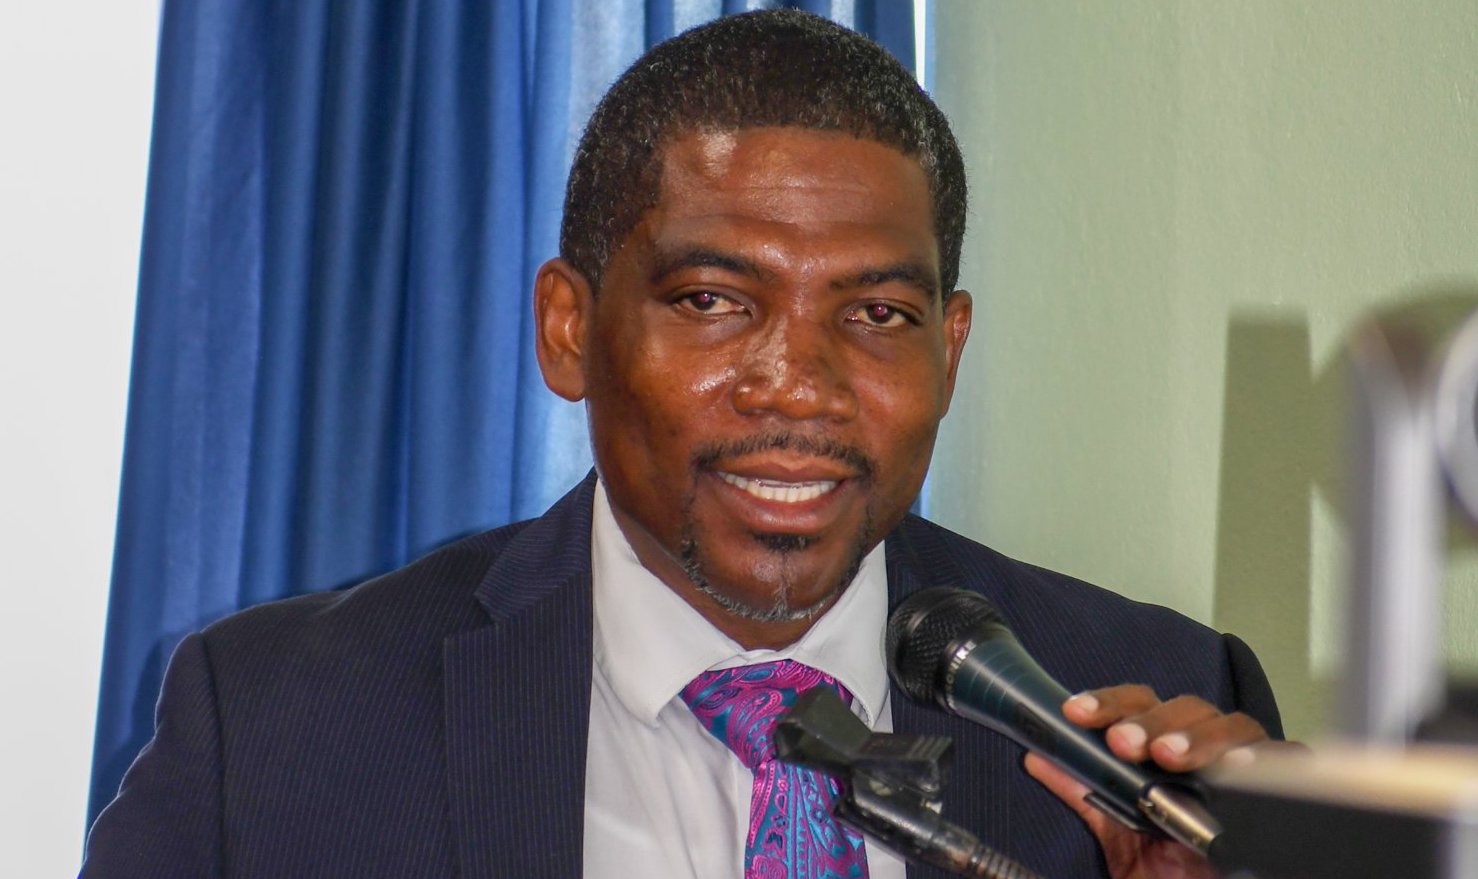 Terrance Drew, Prime Minister of St. Kitts and Nevis